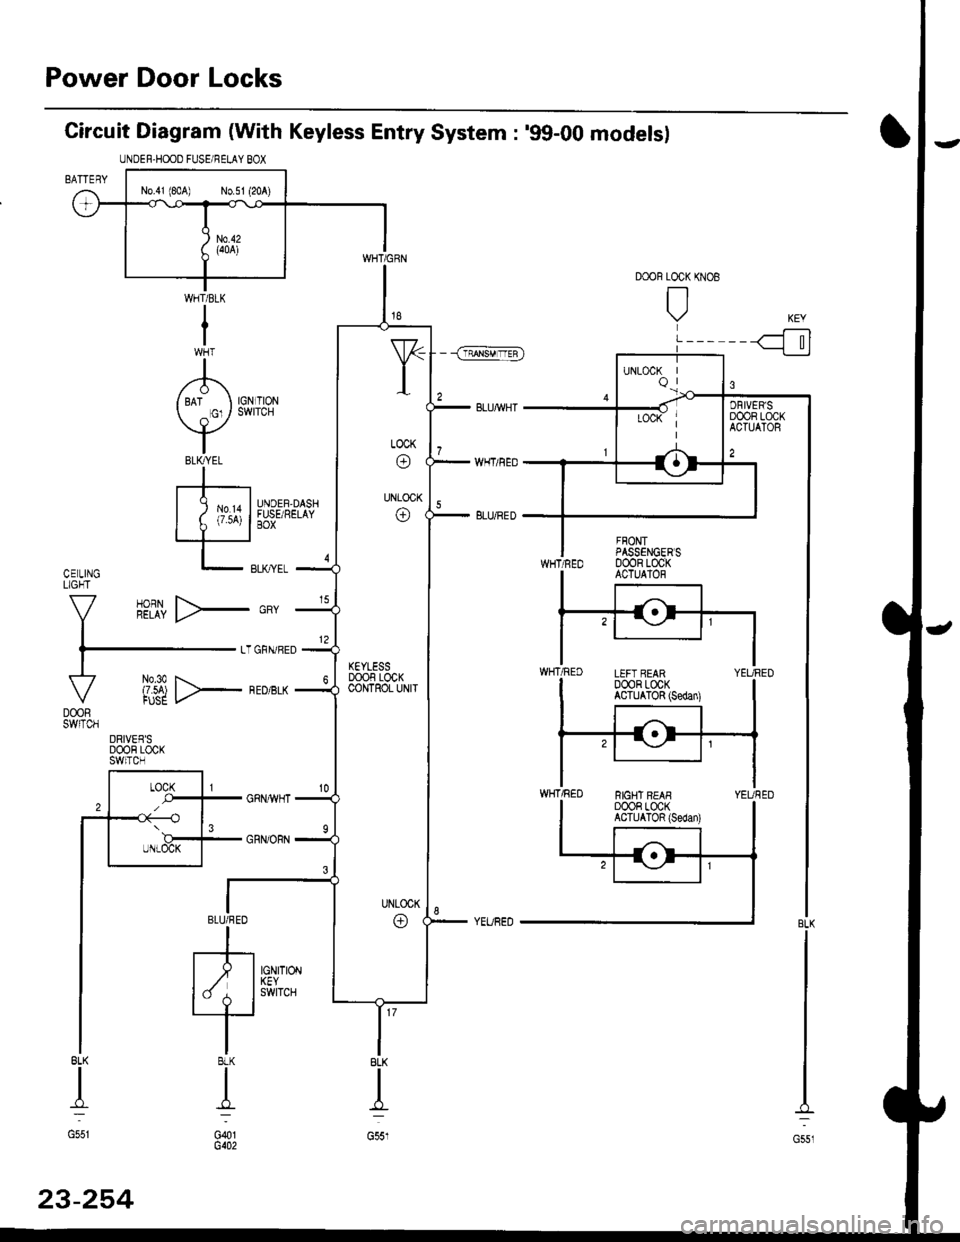 HONDA CIVIC 1997 6.G Owners Manual Power Door Locks
Circuit Diagram (With Keyless Entry System : 99-00 models)
BL(
I
G551
UNDEF.HOOO FUSE/RELAY BOX
N0.41 1804) N0.51 (20 )
KEYLESSDOOF LOCKCOIJTROL UNIT
DRIVEFSDOOF LOCKSWITCH
23-254 